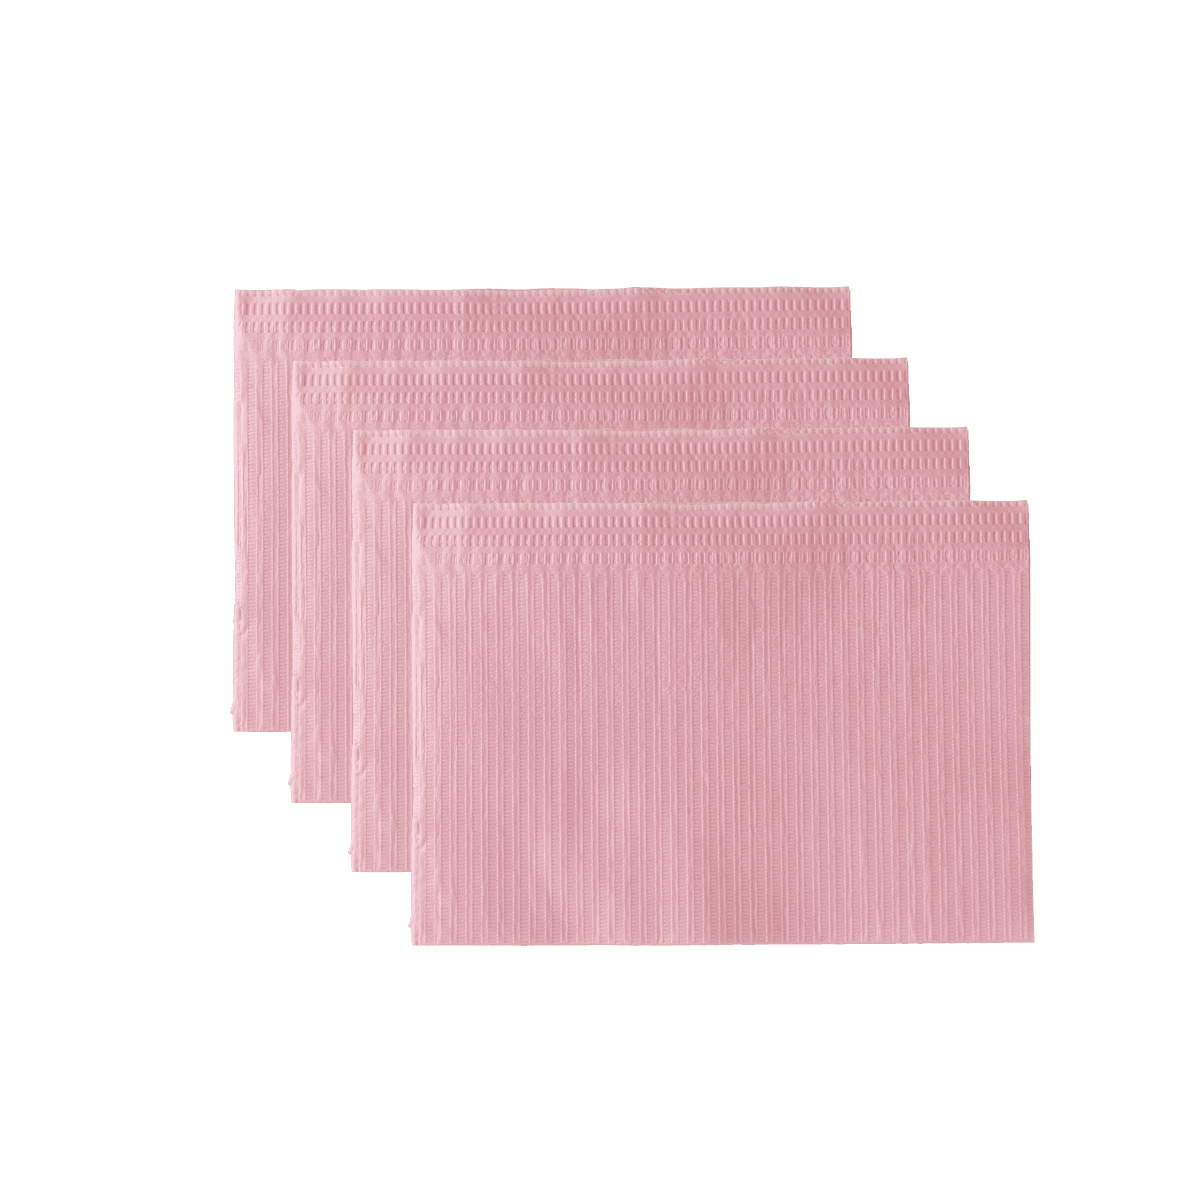 Monoart Patientenservietten Towel UP Farbe: rosa (Euronda)